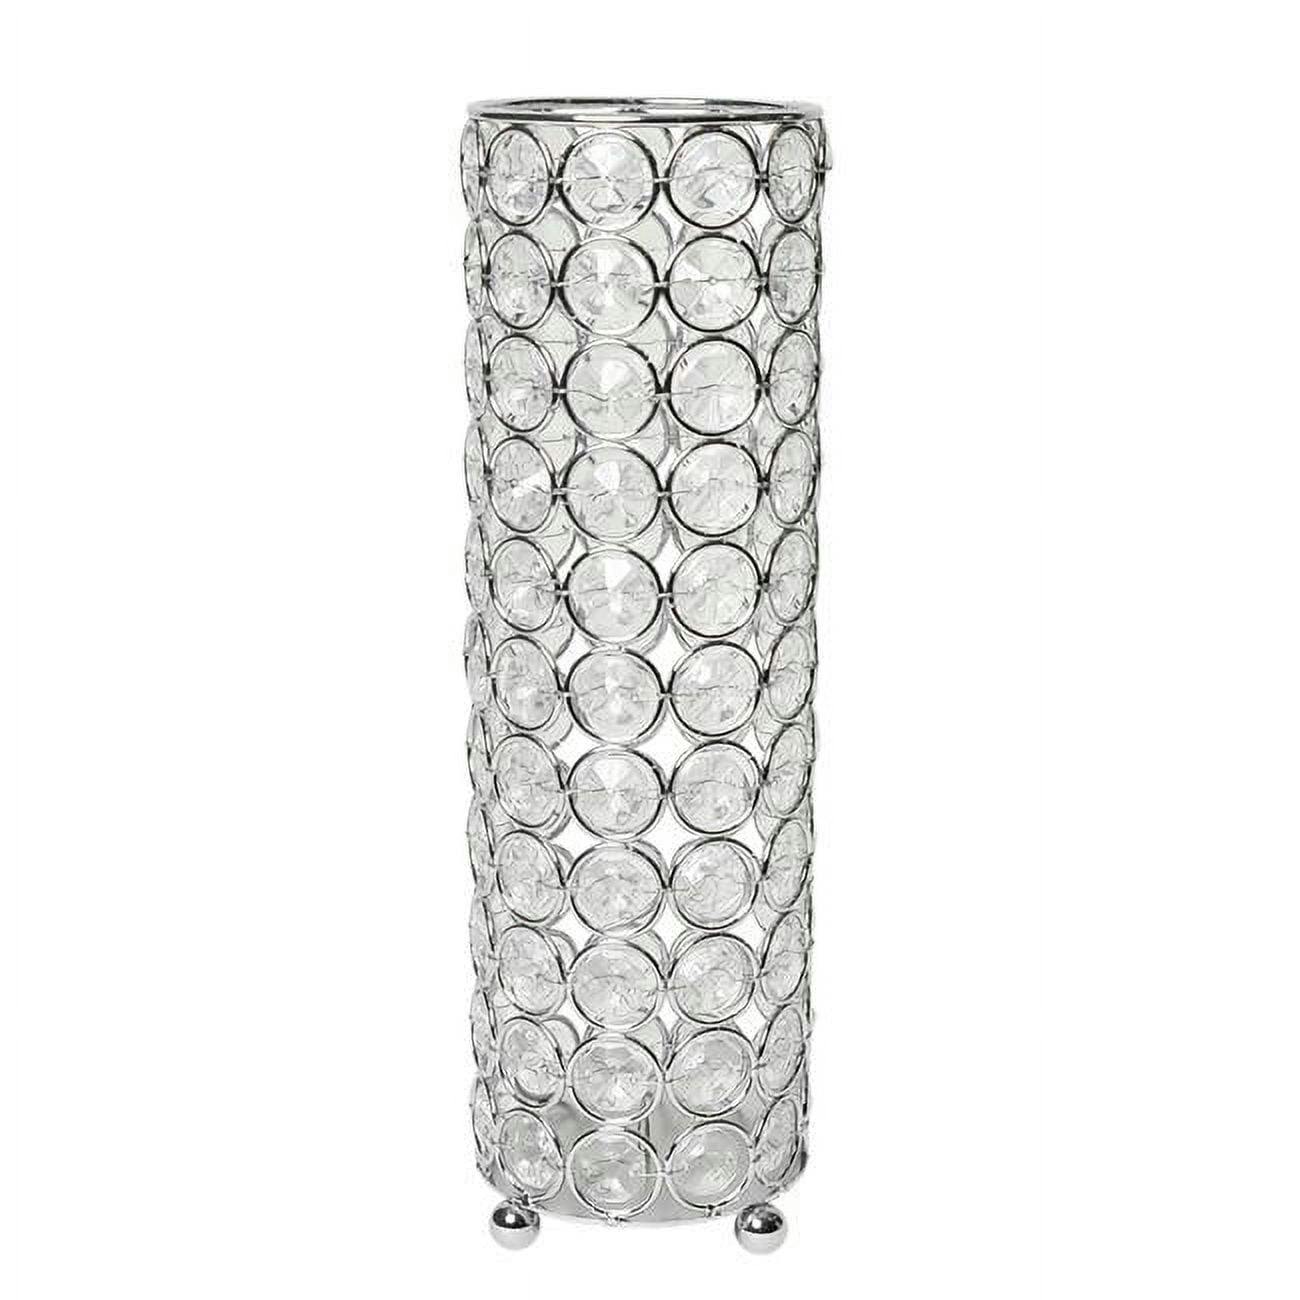 Elipse 11" Chrome and Crystal Decorative Vase/Candle Holder